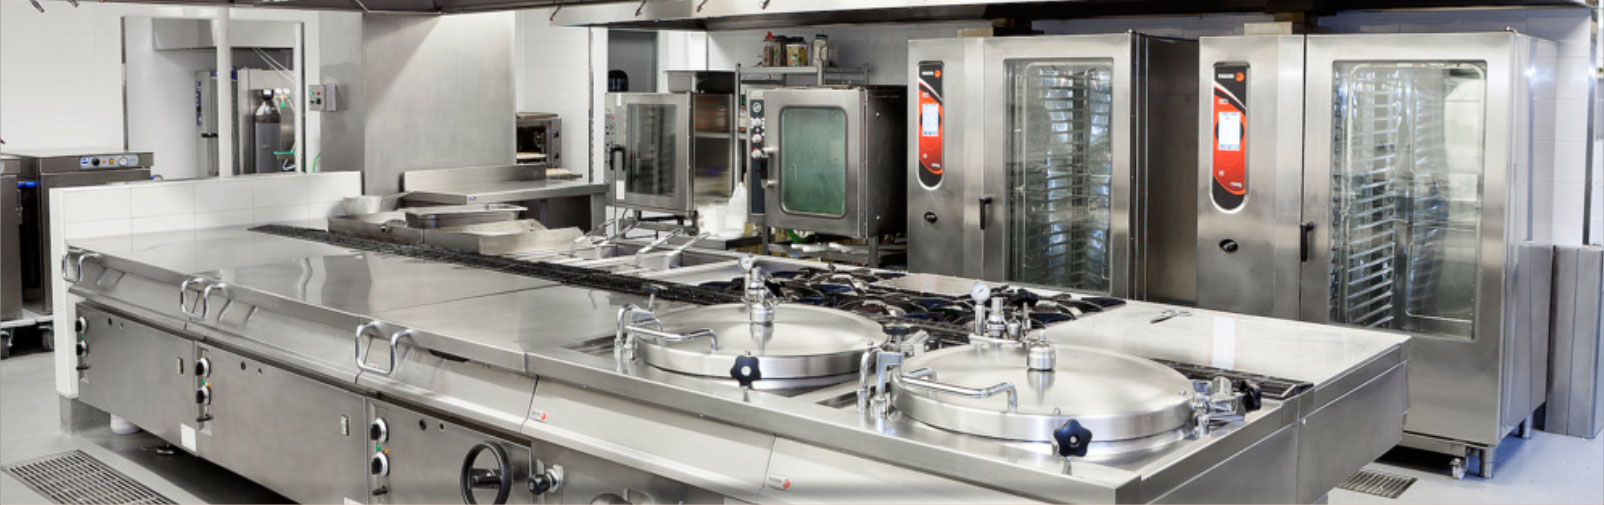 Commercial Industrial Restaurant Hotel Kitchen Equipment